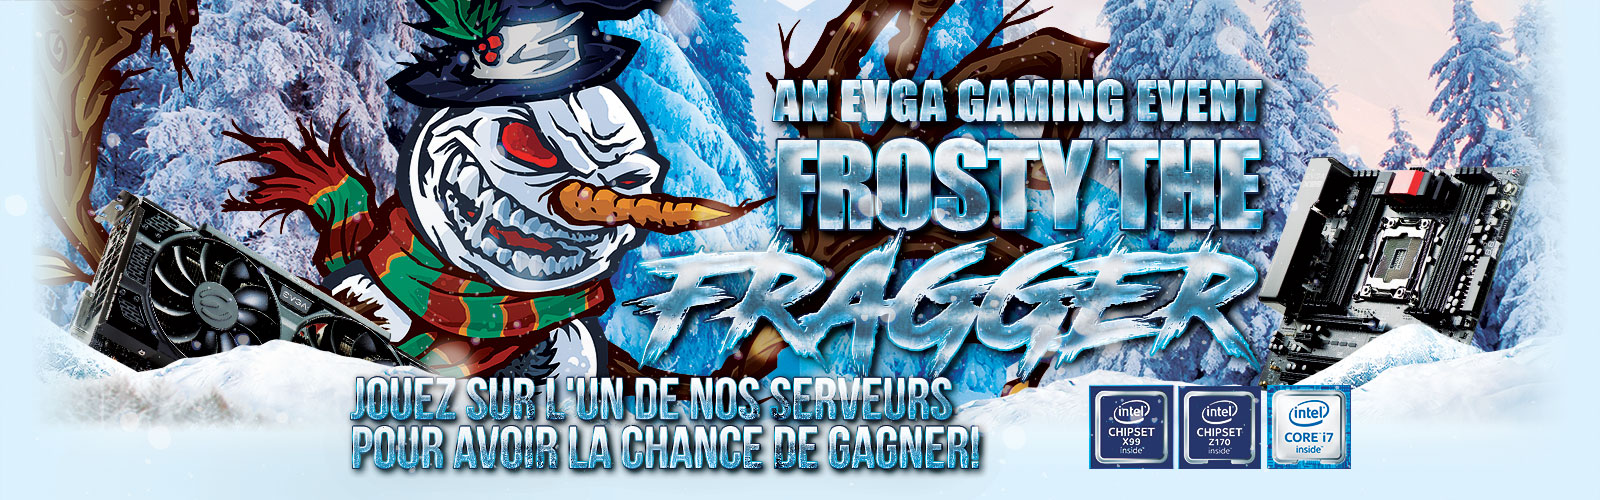 L'événement Frosty The Fragger Gaming d'EVGA